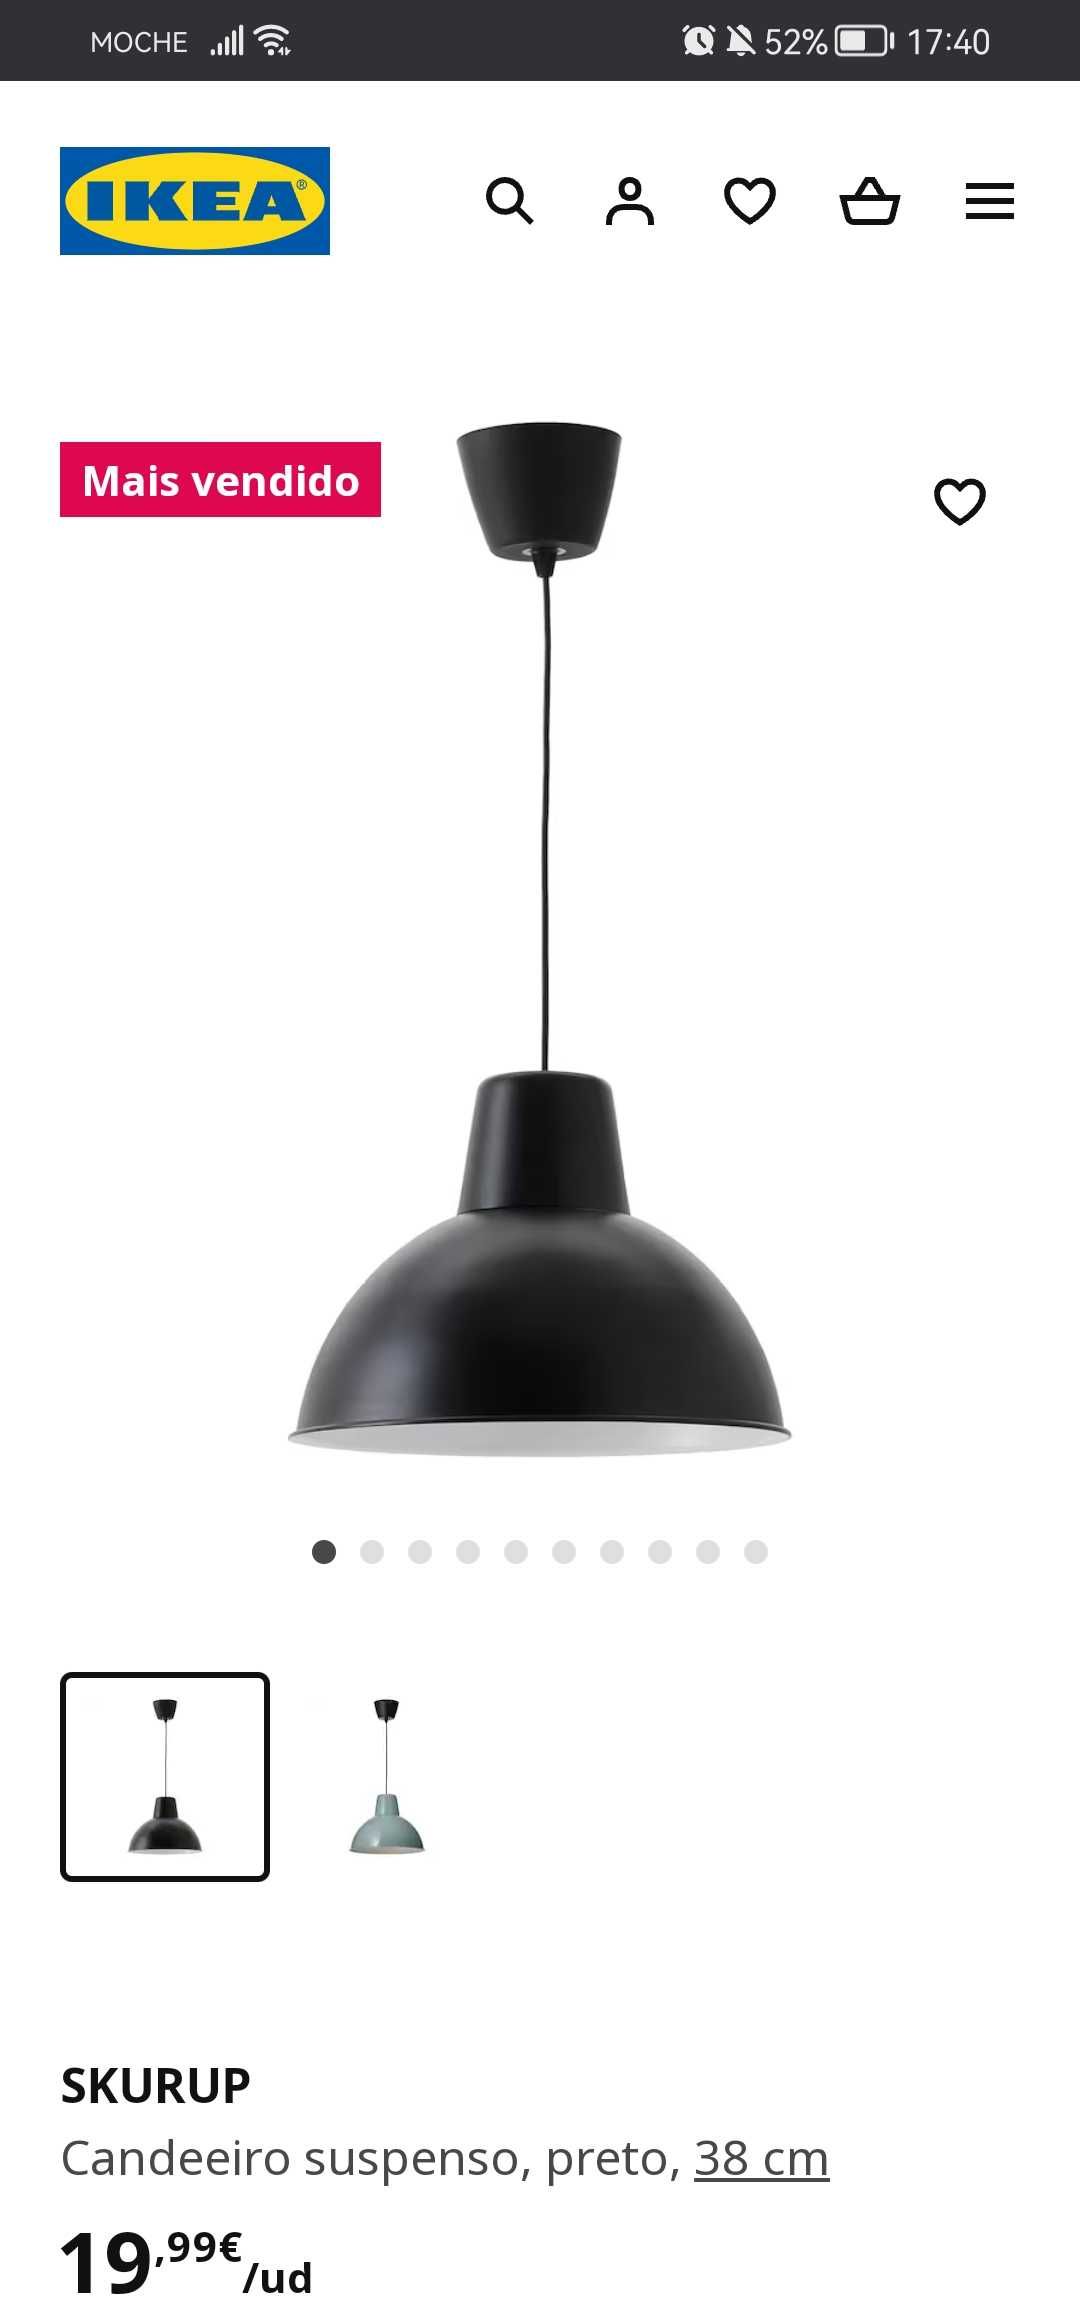 Candeeiro IKEA preto